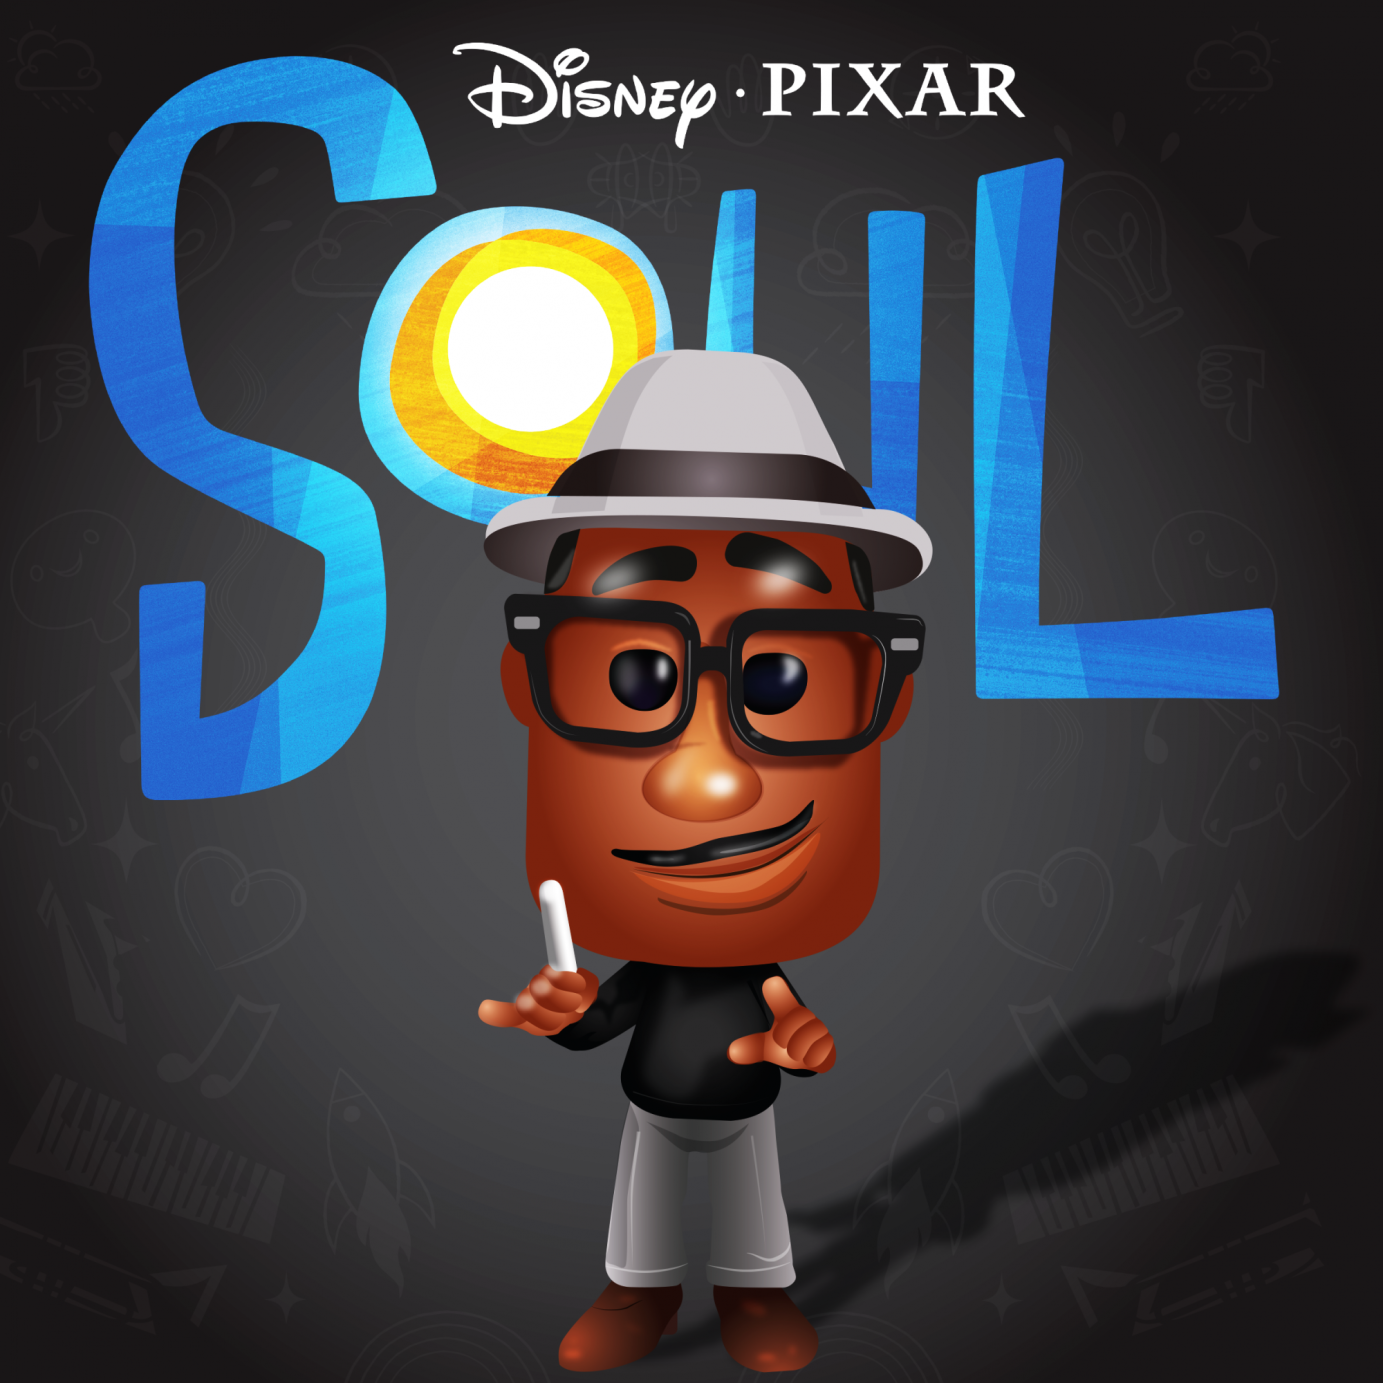 Disney + Pixar movie "Soul"